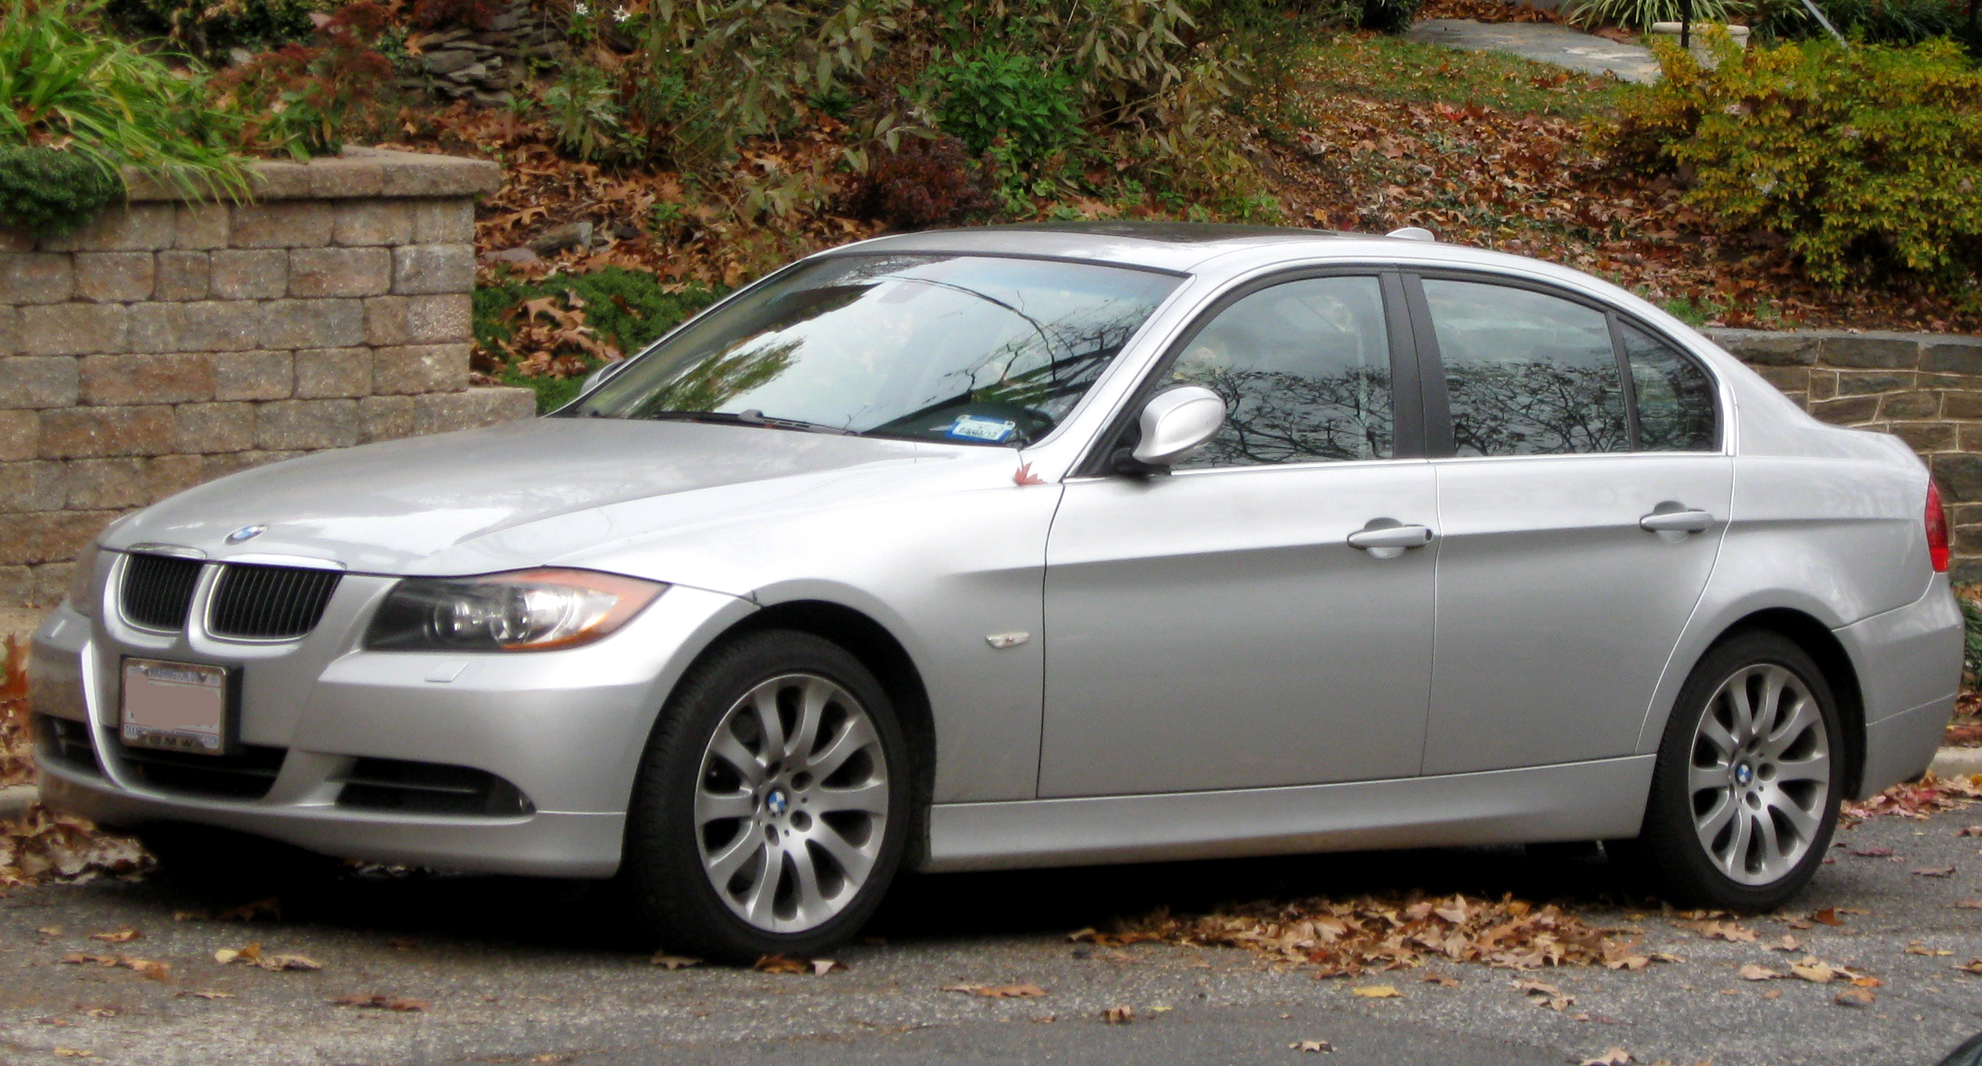 File:2006 BMW 330Xi sedan -- 11-13-2011.jpg - Wikimedia Commons